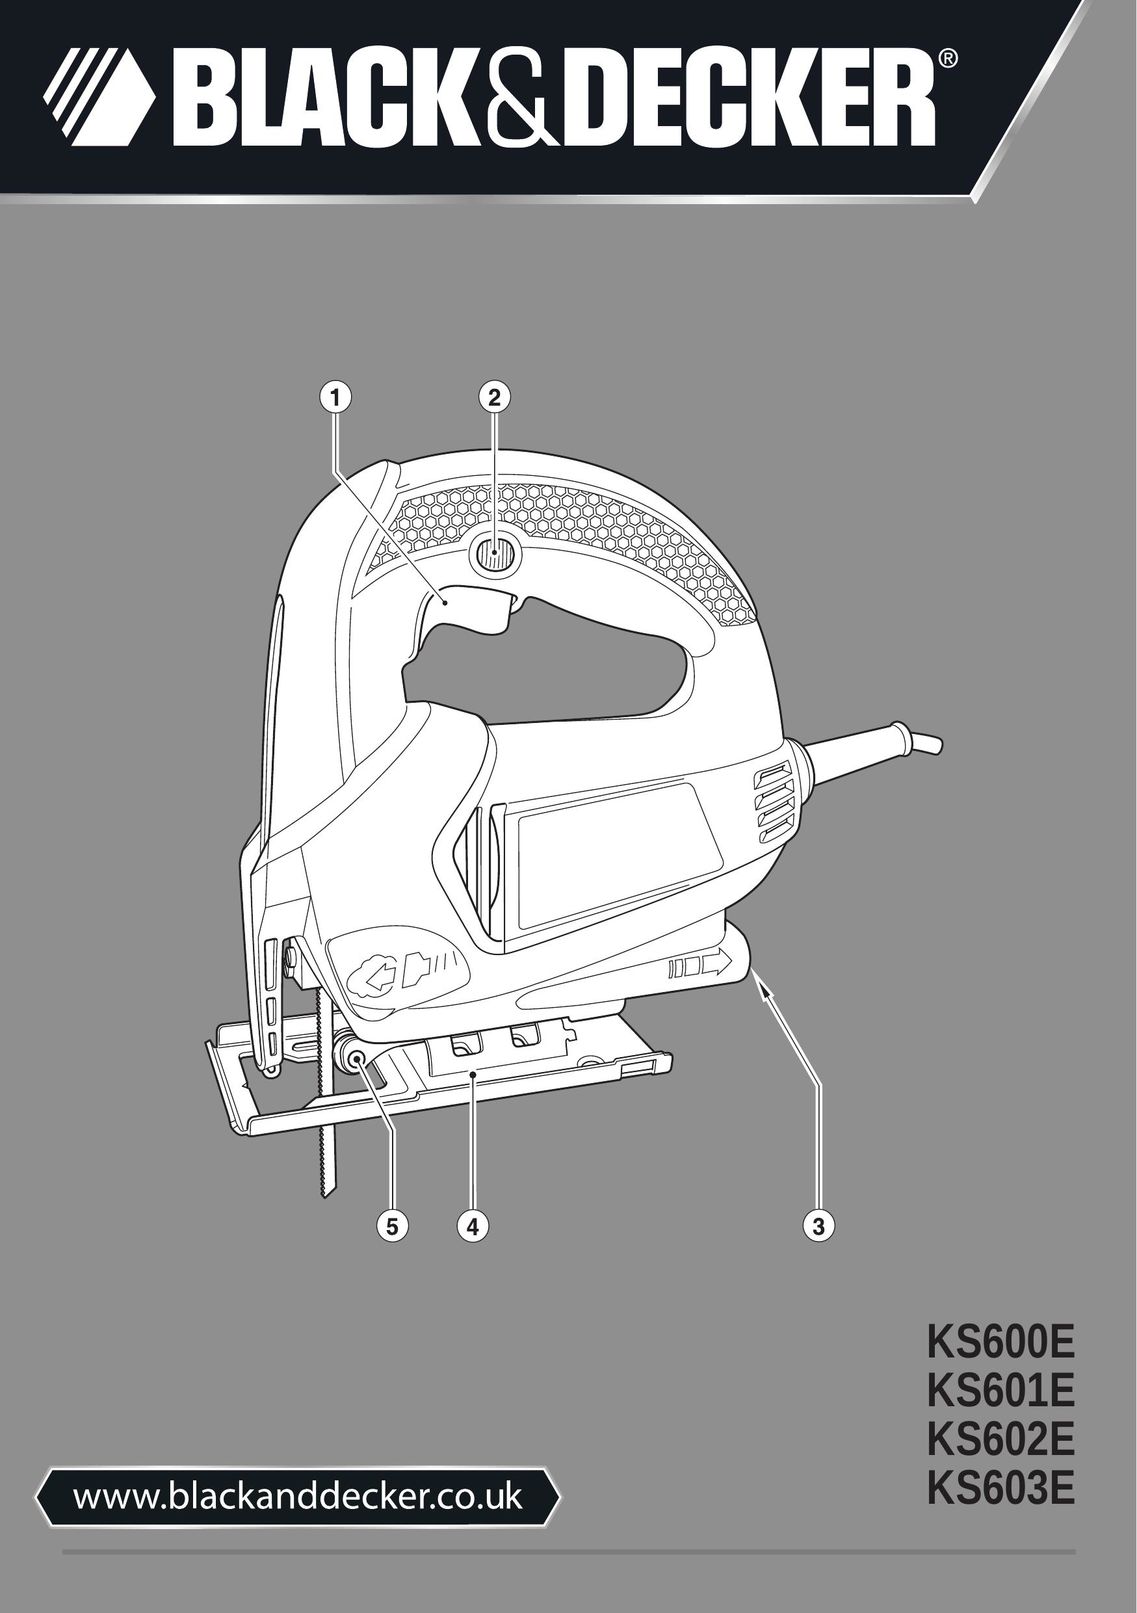 Black & Decker KS600E Cordless Saw User Manual